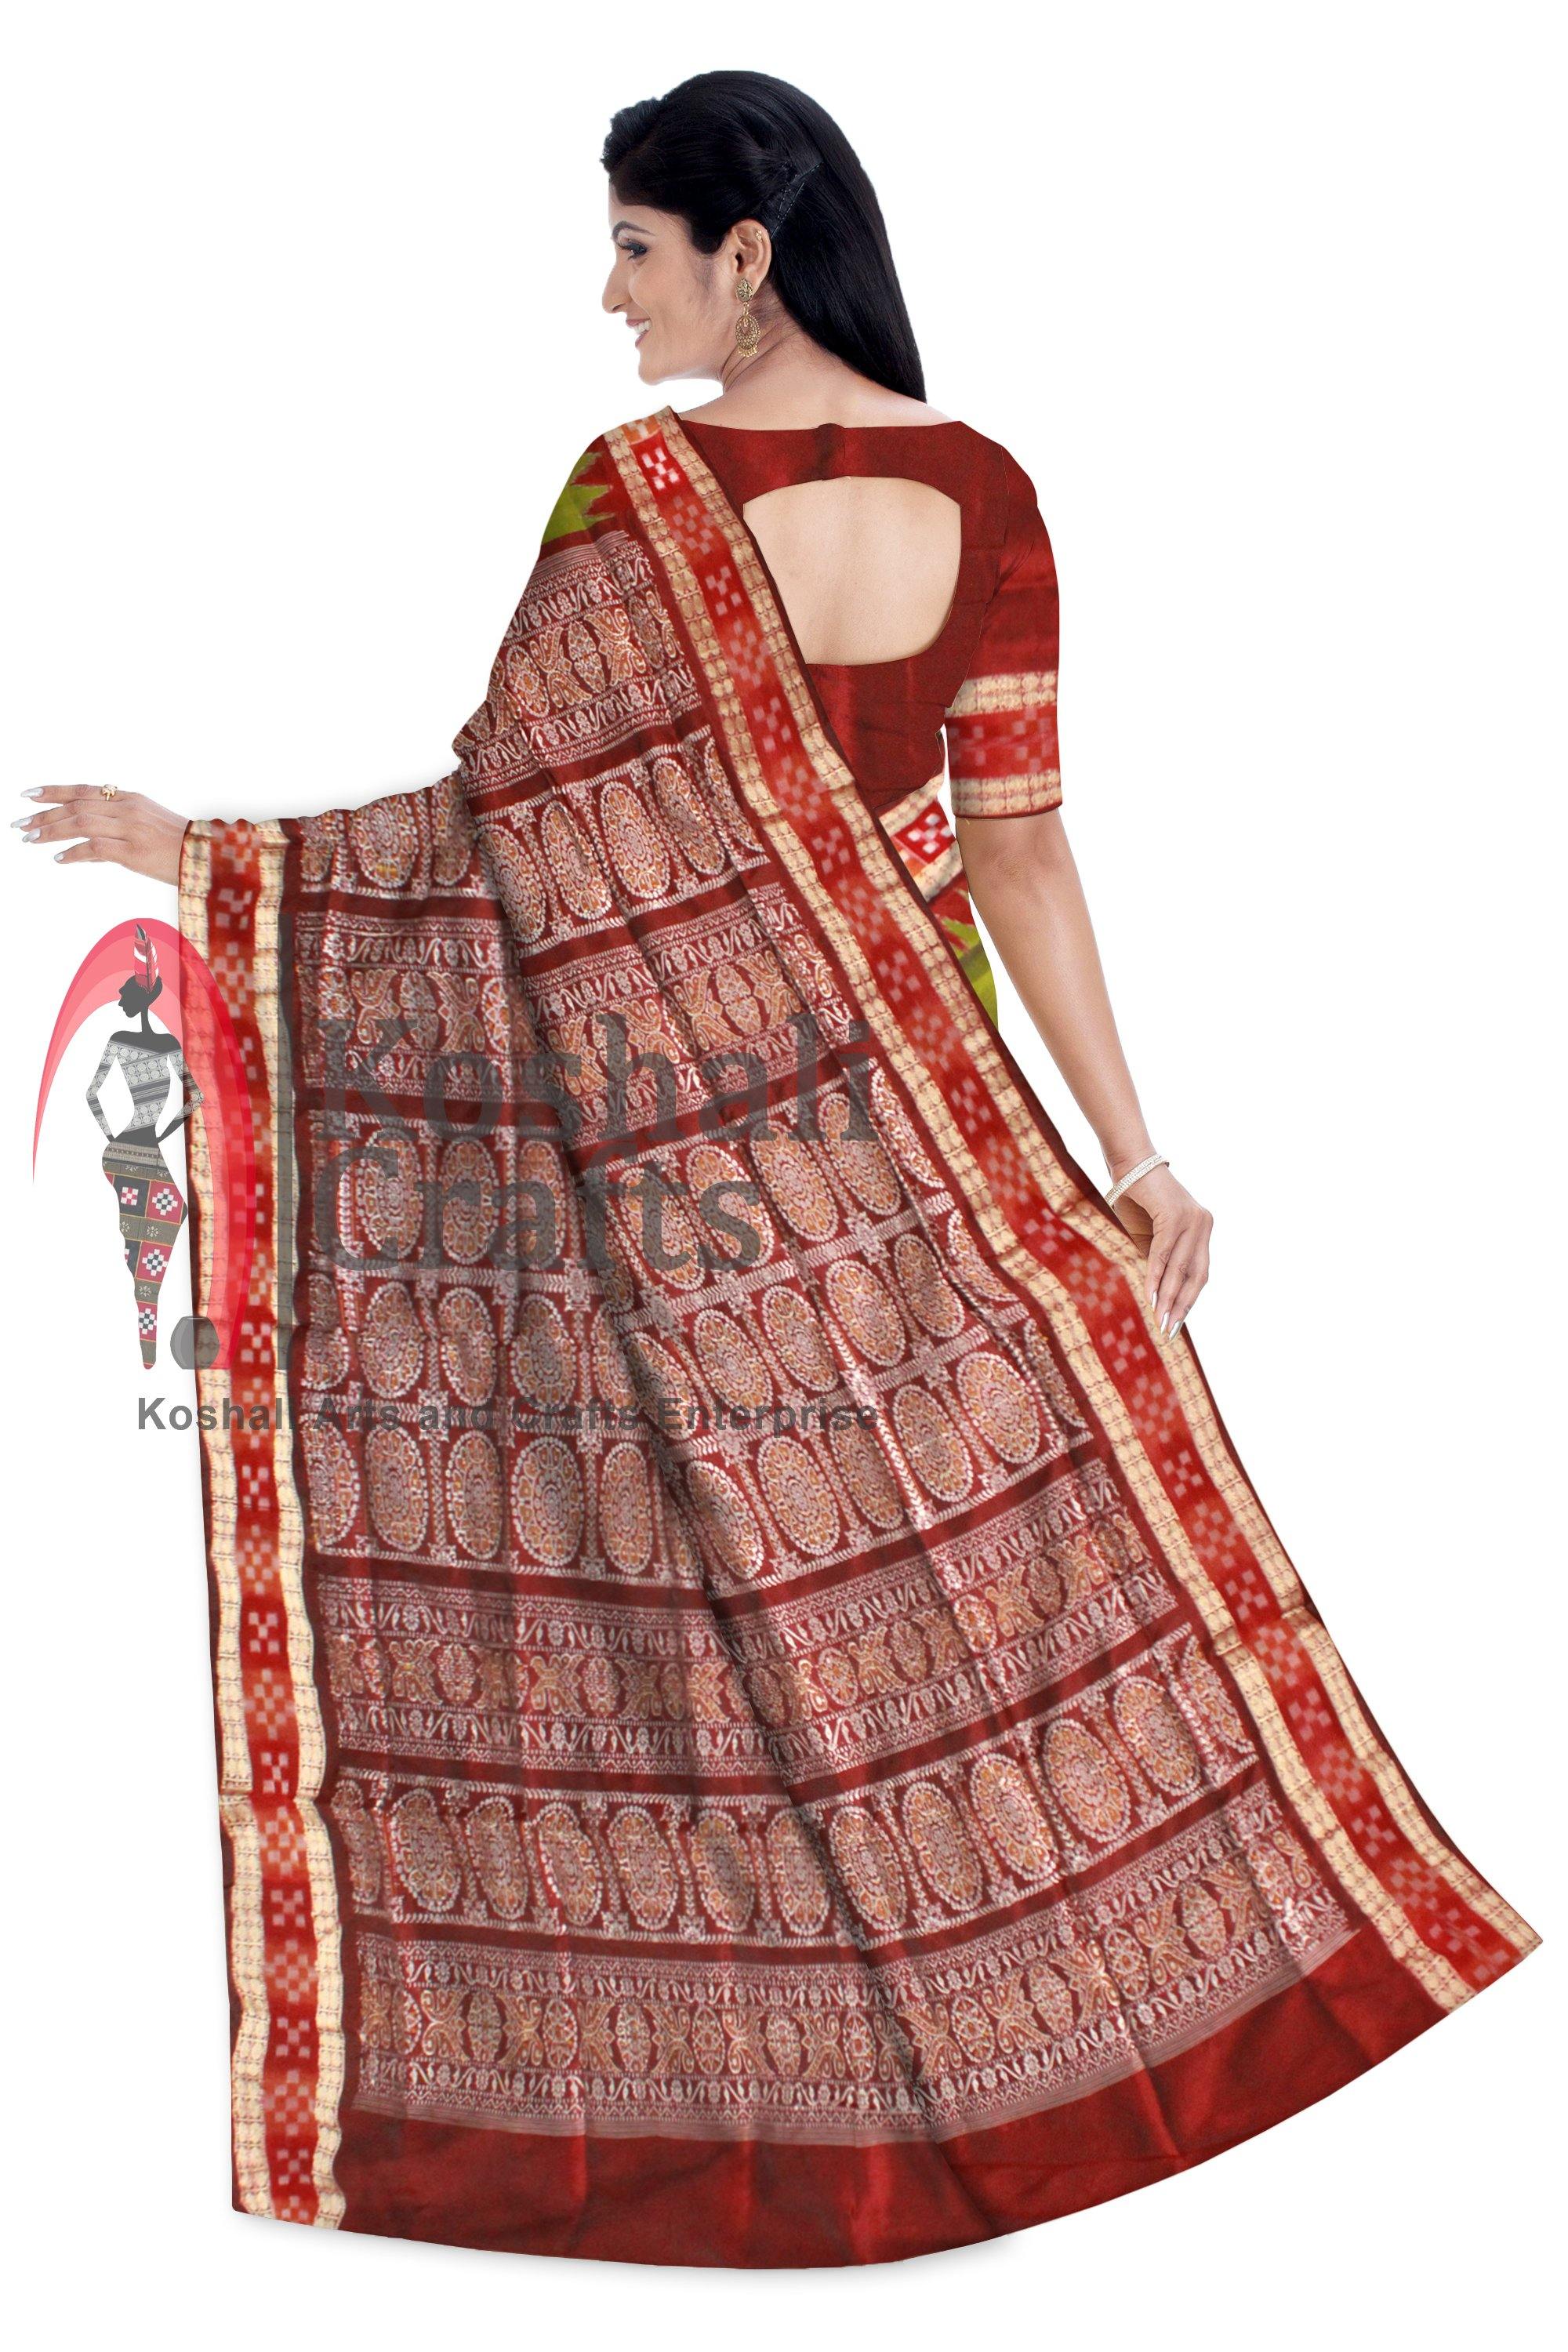 Green color buti pattern Sambalpuri pata saree with Pasapali border, Blouse piece available. - Koshali Arts & Crafts Enterprise